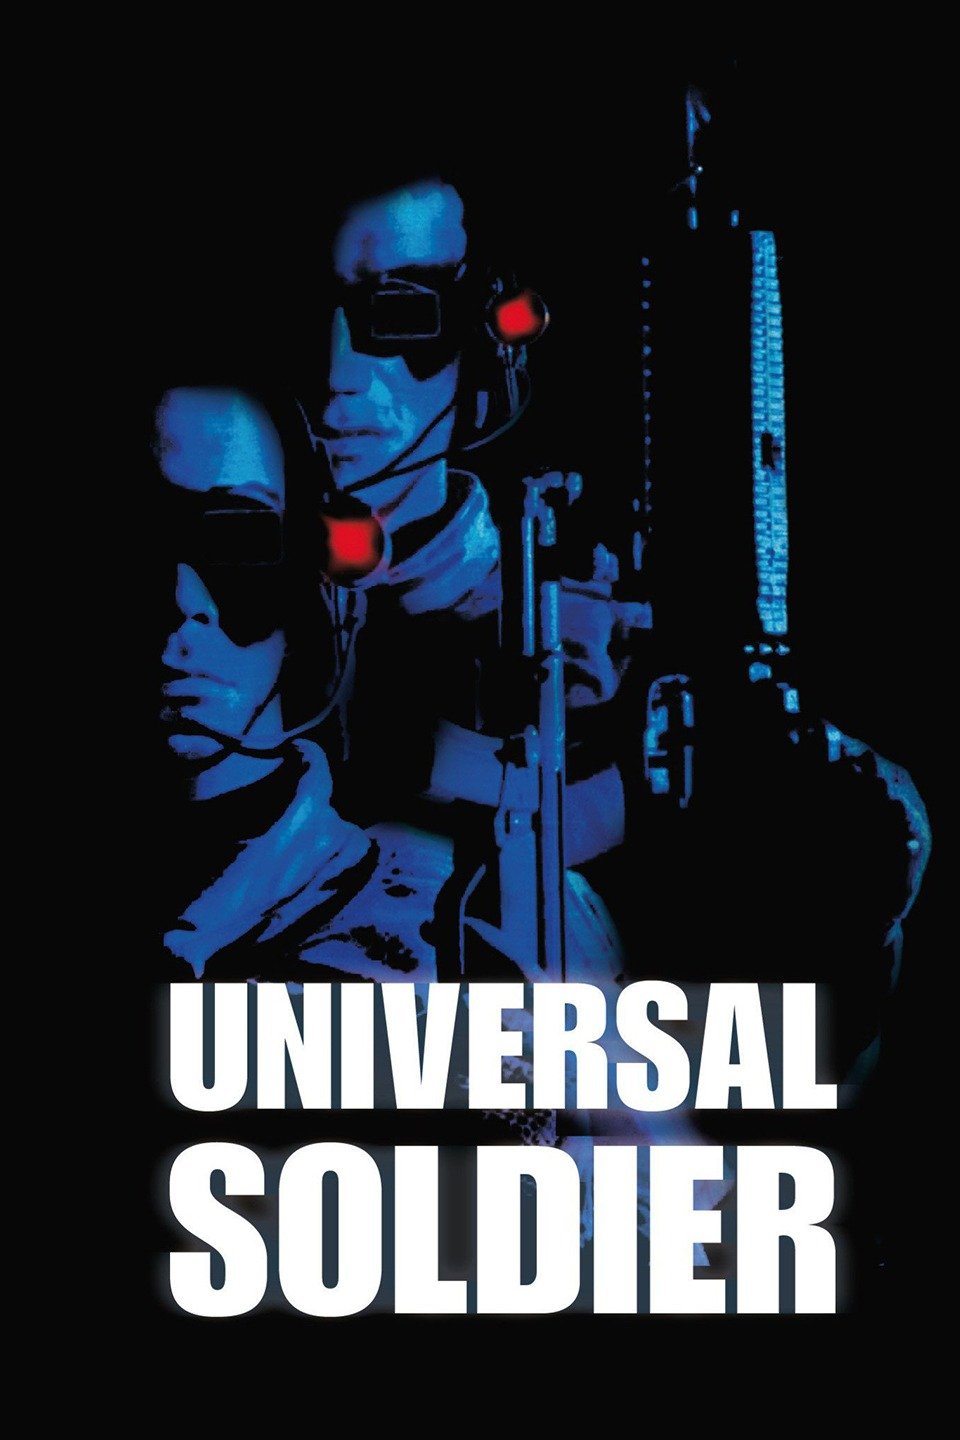 [FULL-HD LHQ] Universal Soldier (1992) 2 คนไม่ใช่คน ภาค 1 [1080p] [พากย์ไทย 5.1 + เสียงอังกฤษ DTS] [บรรยายไทย + อังกฤษ] [เสียงไทย + ซับไทย] [OPENLOAD]